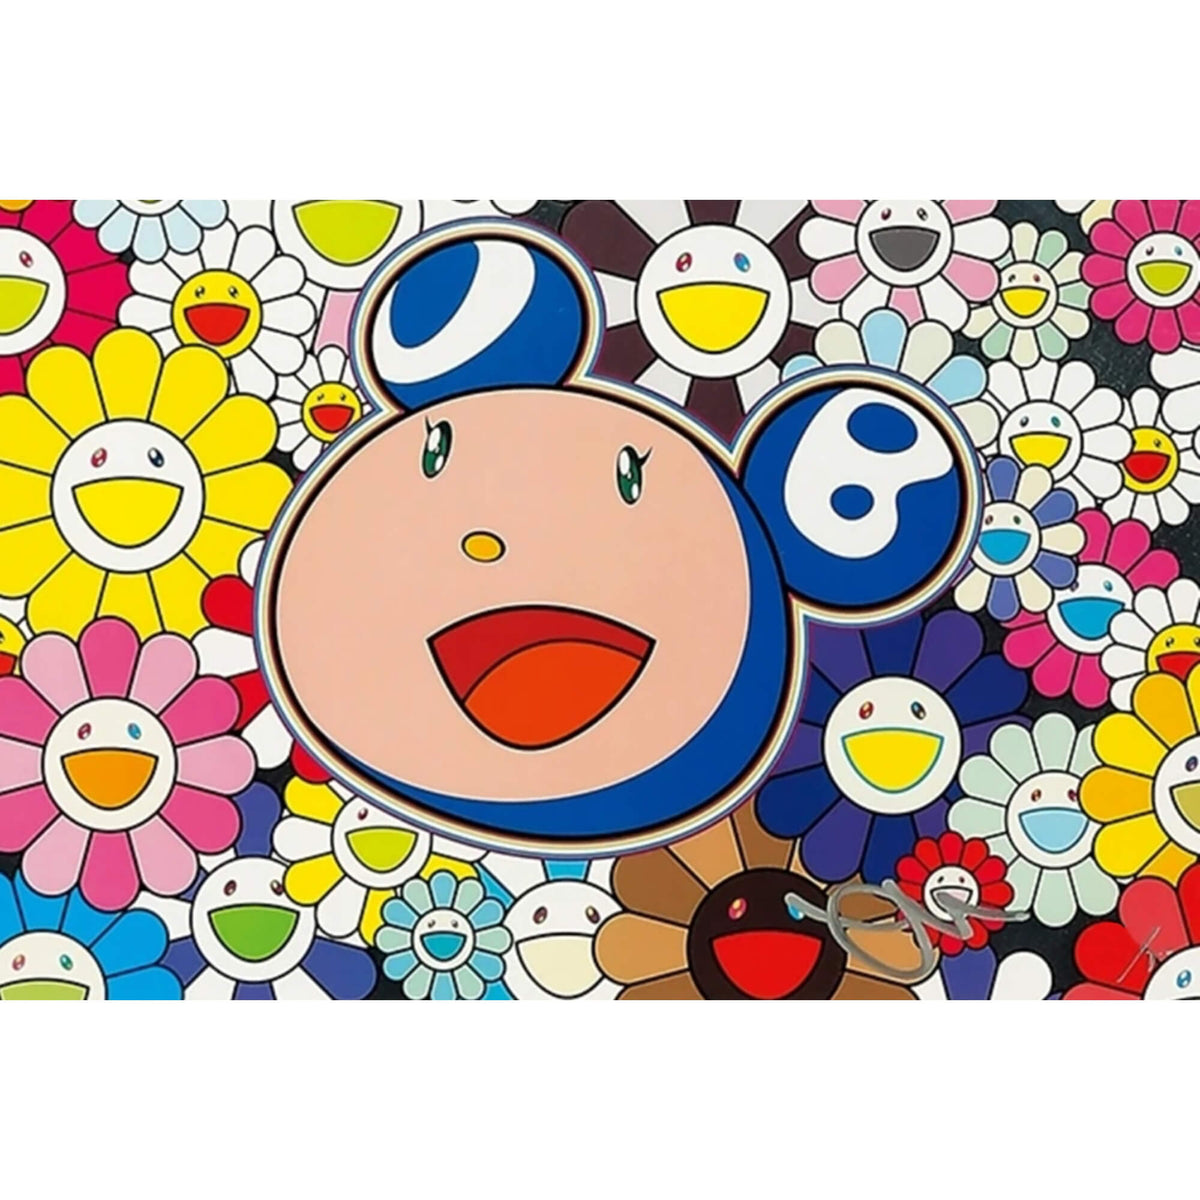 Christies - 7 things to know about Japanese artist Takashi Murakami